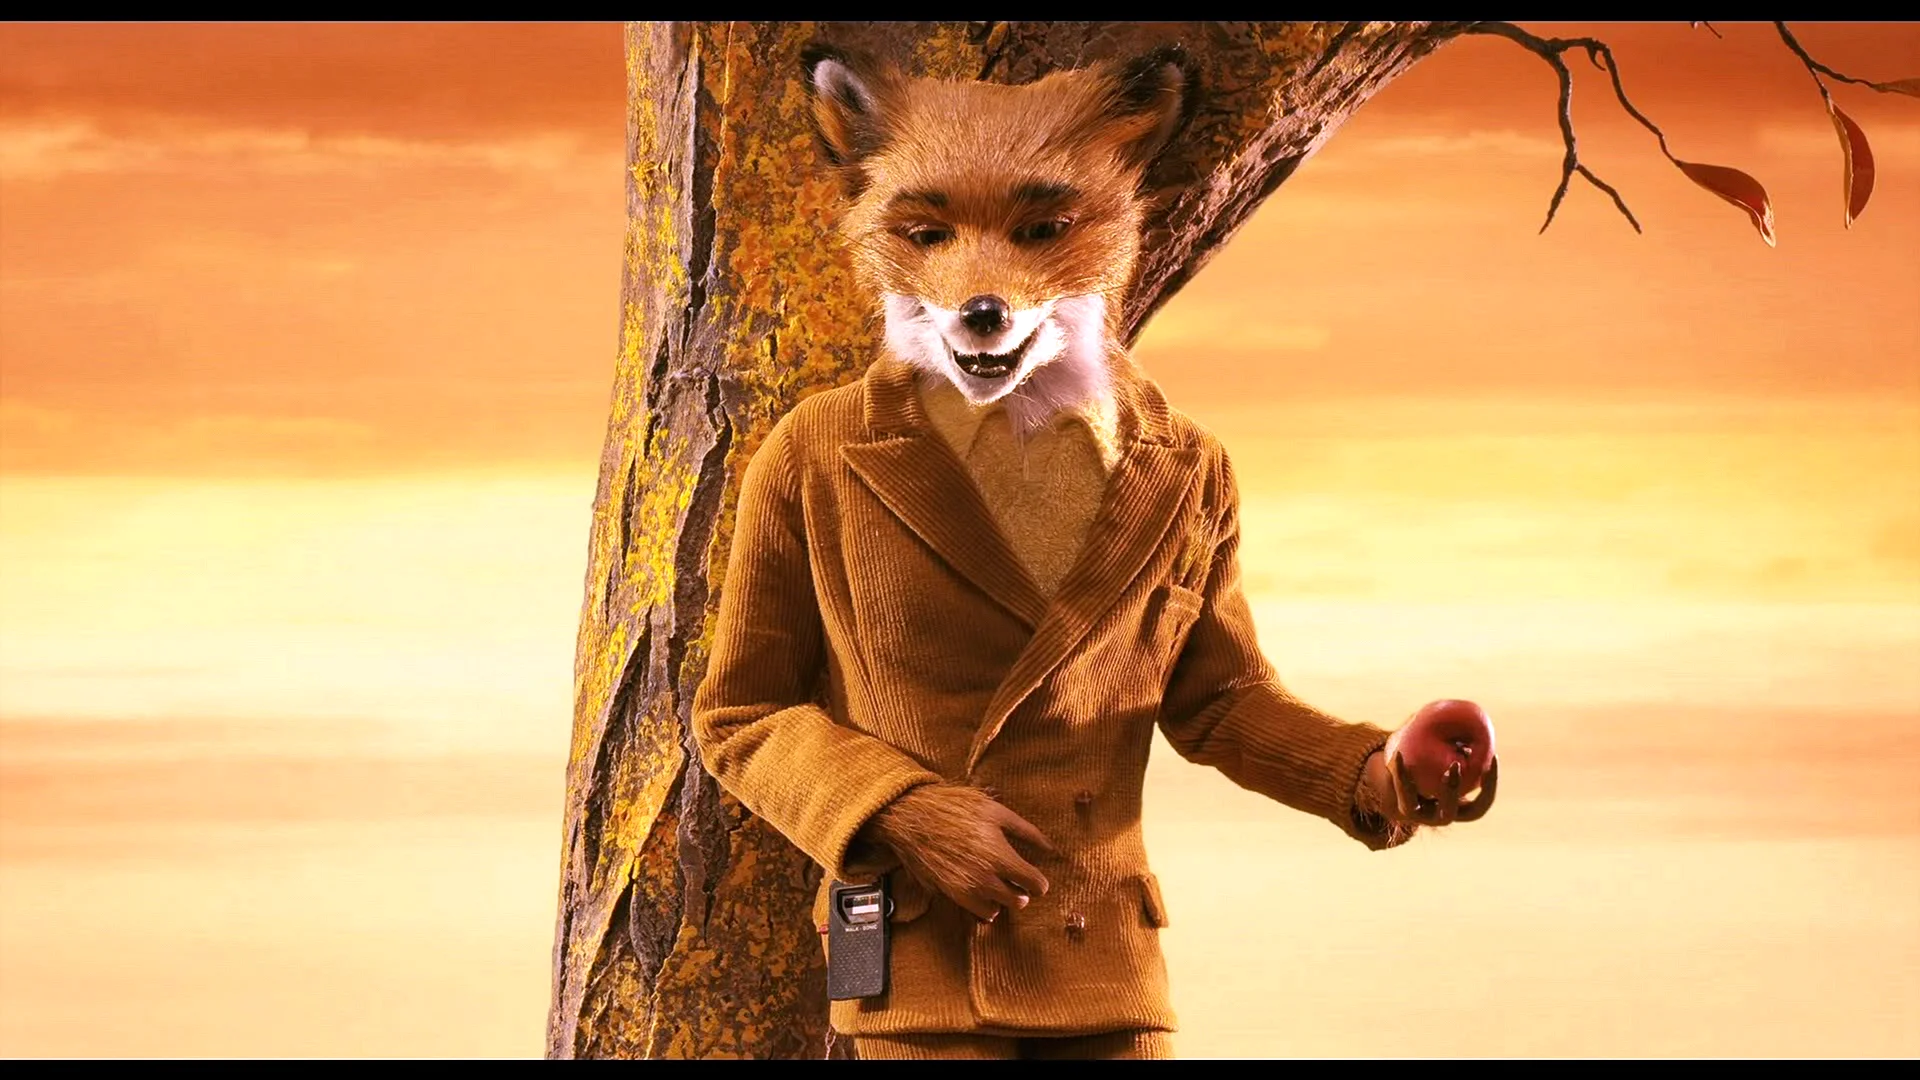 Million fox. Бесподобный Мистер Фокс. Уэс Андерсон бесподобный Мистер Фокс. Бесподобный Мистер ФОК. Бесподобный Мистер Фокс / fantastic Mr. Fox.